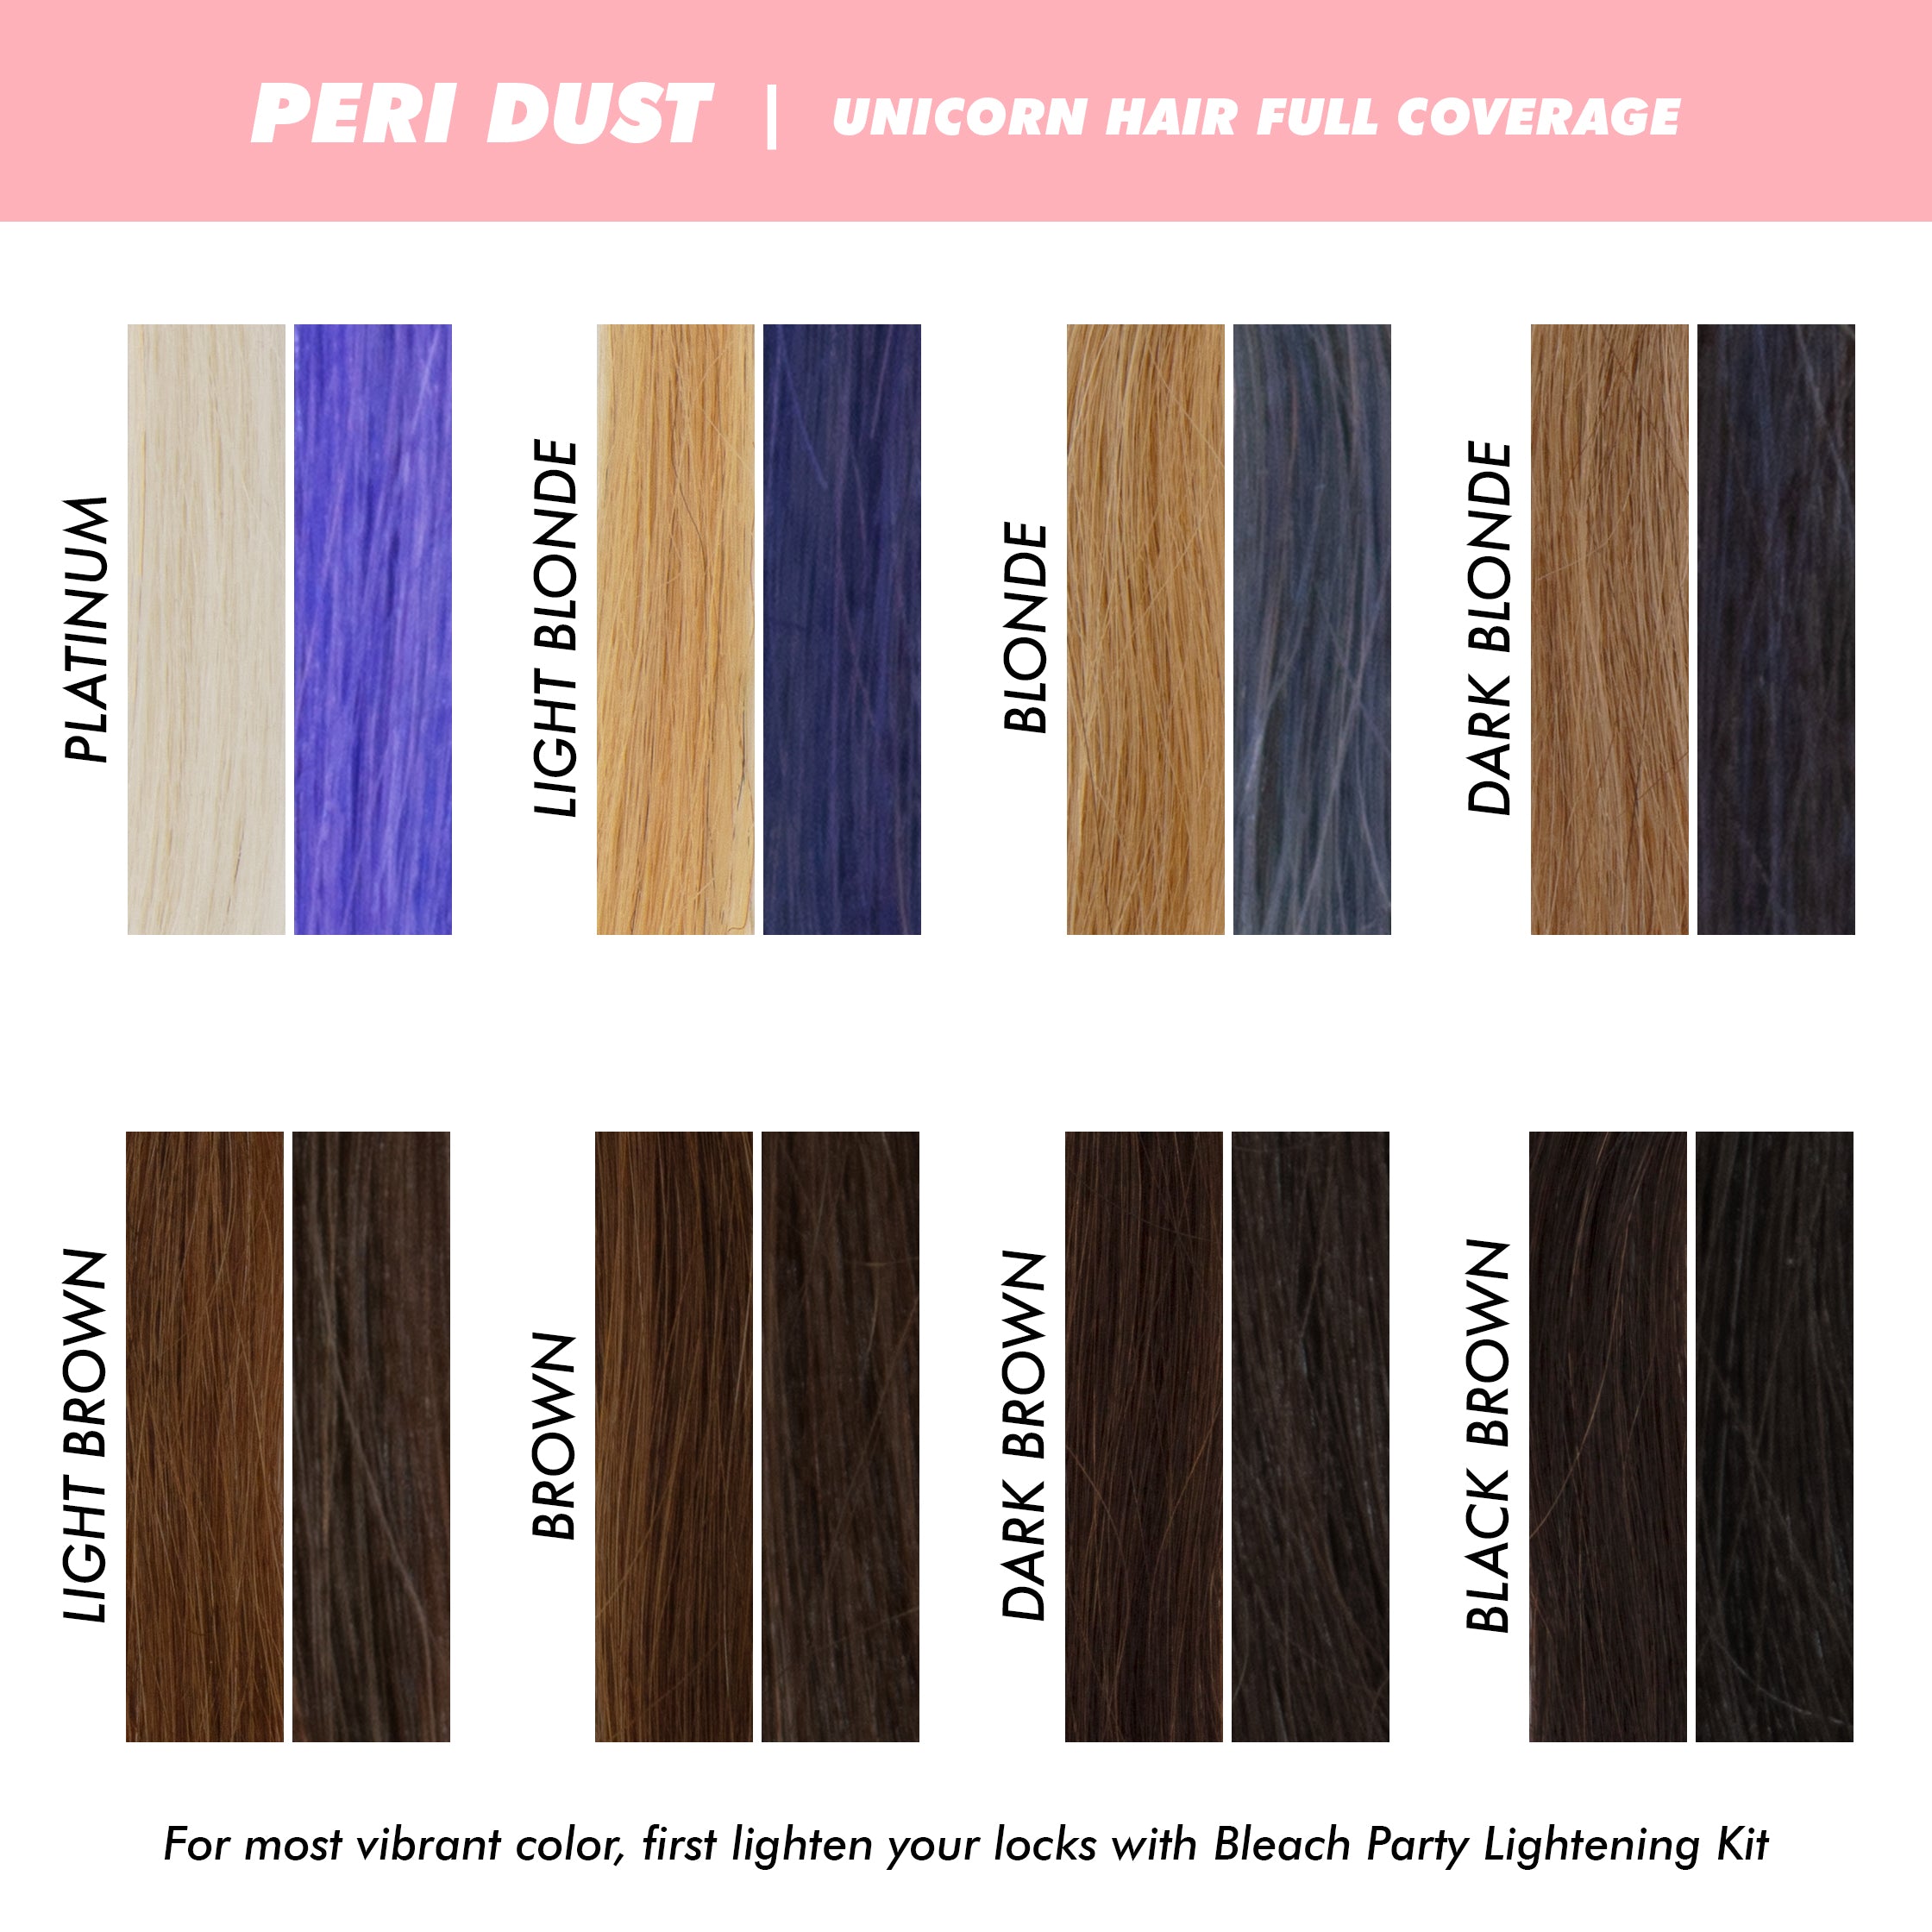 Unicorn Hair Full Coverage variant:Peri Dust